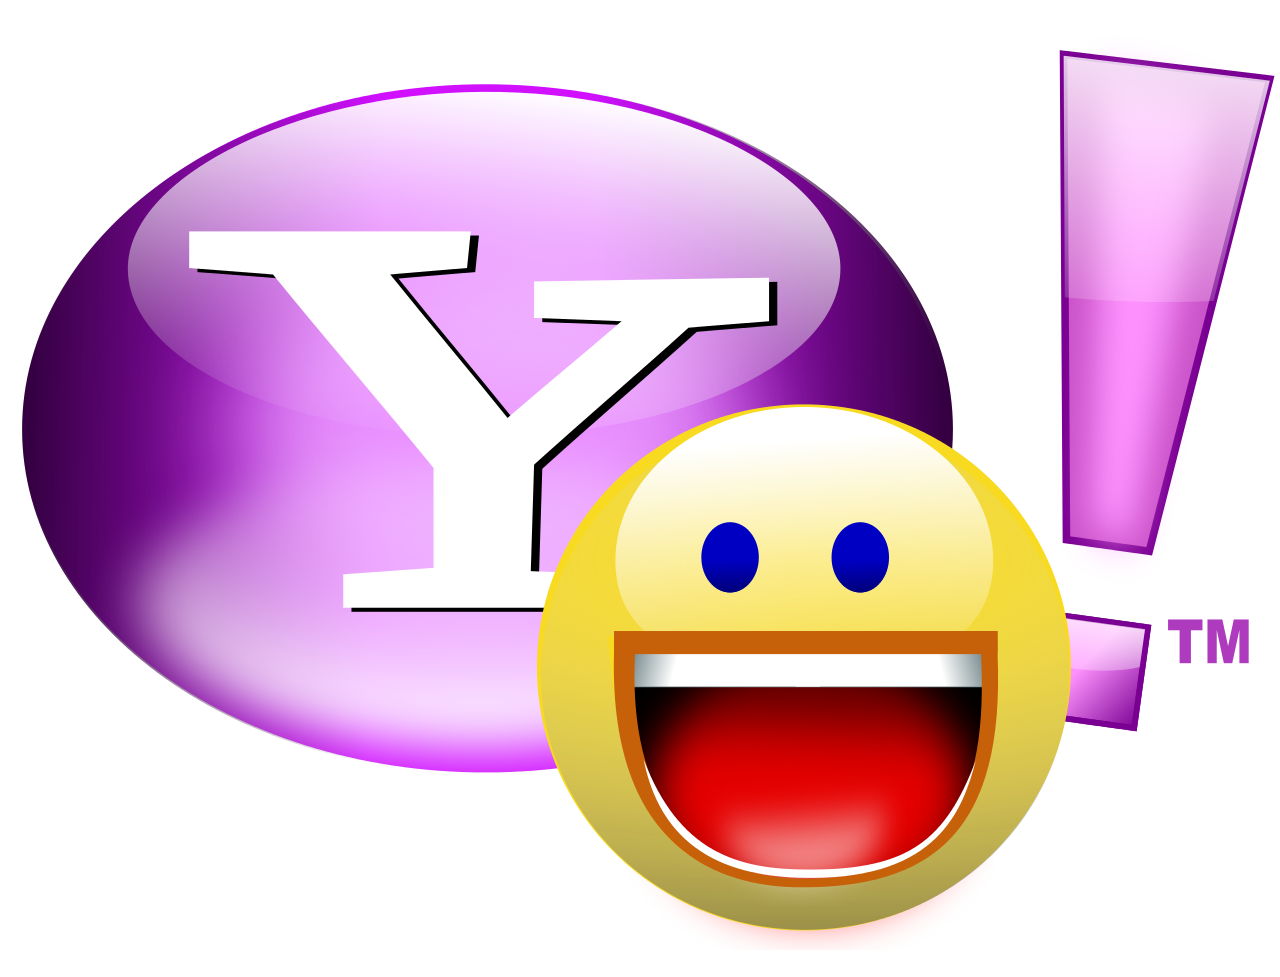 Yahoo kills its old Messenger app